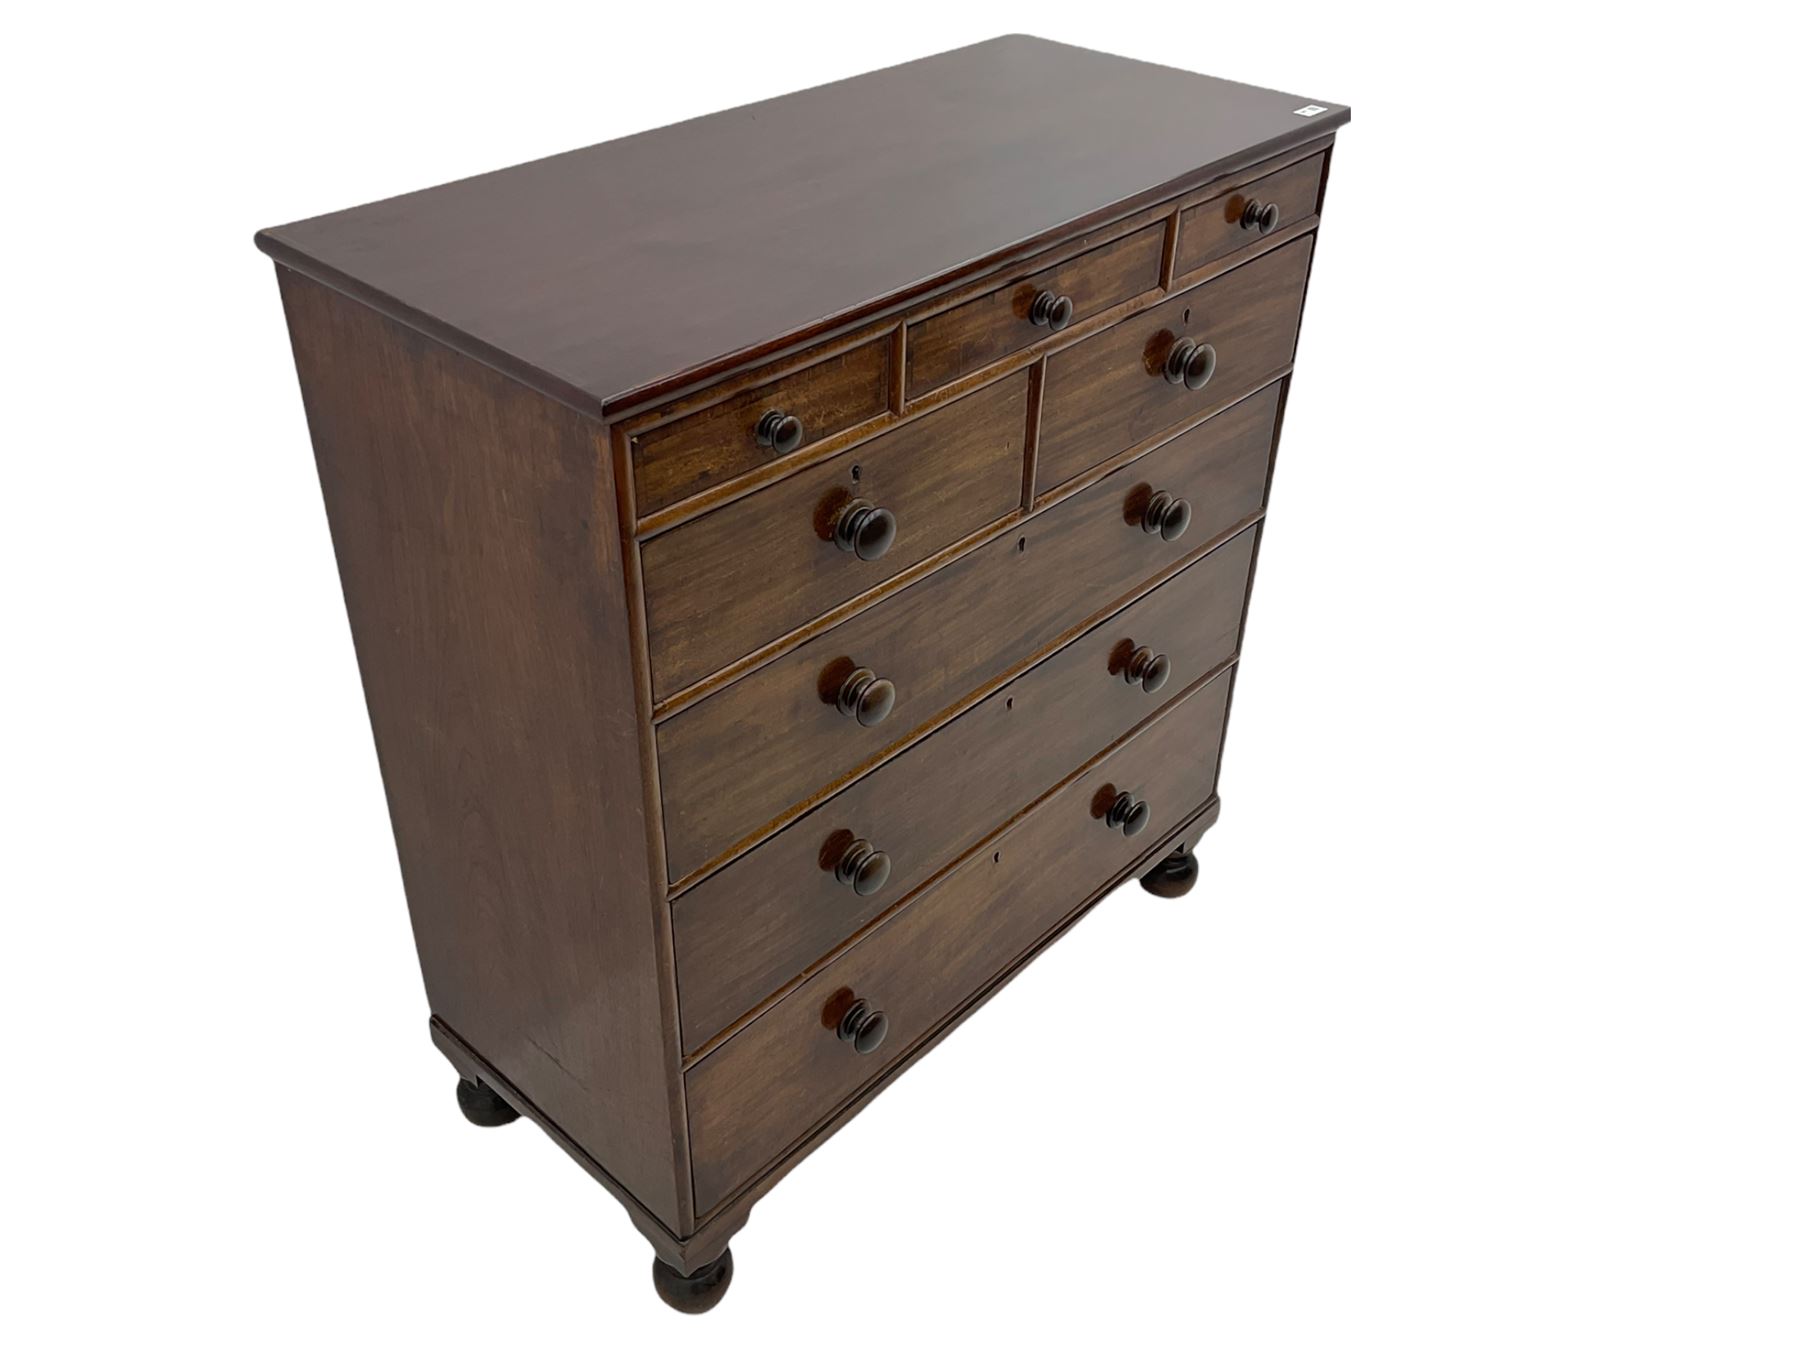 19th century mahogany chest - Image 6 of 14